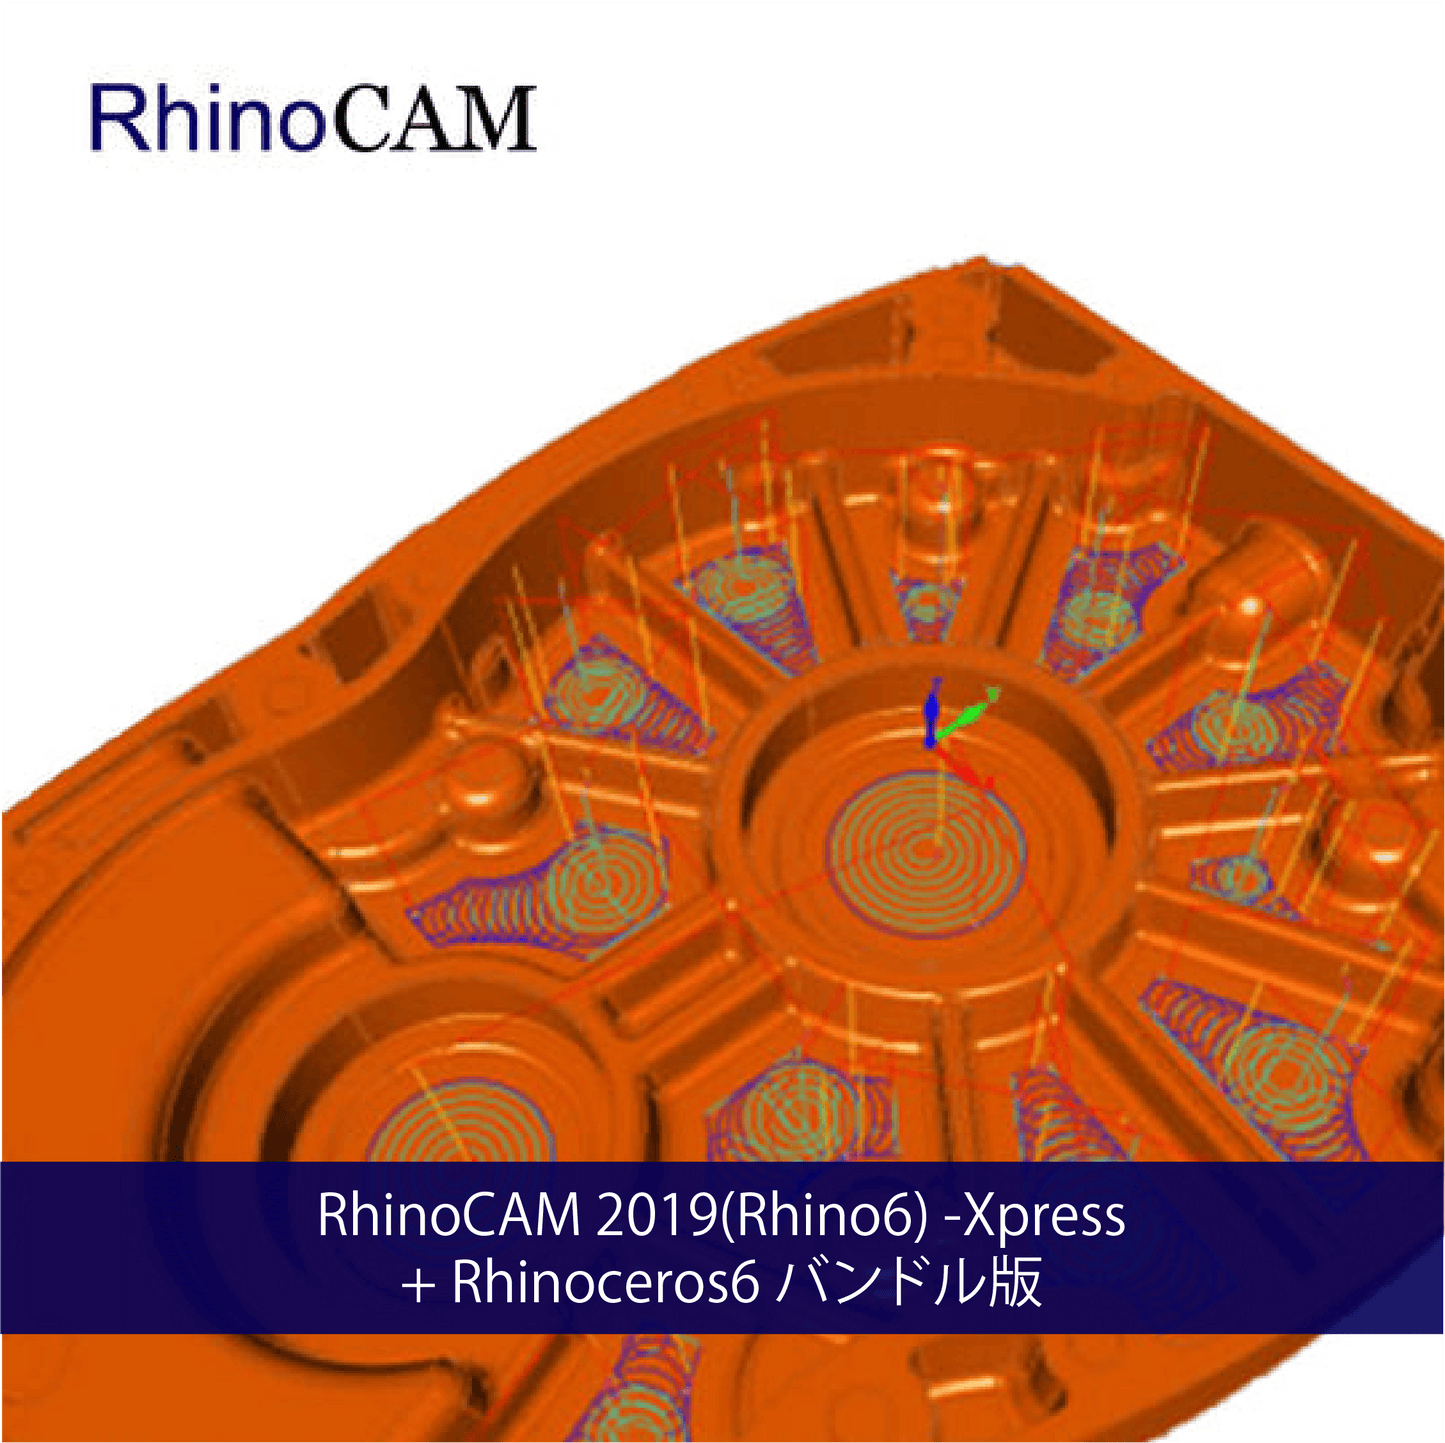 RhinoCAM 2019(Rhino6) Xpress + Rhinoceros6 バンドル版